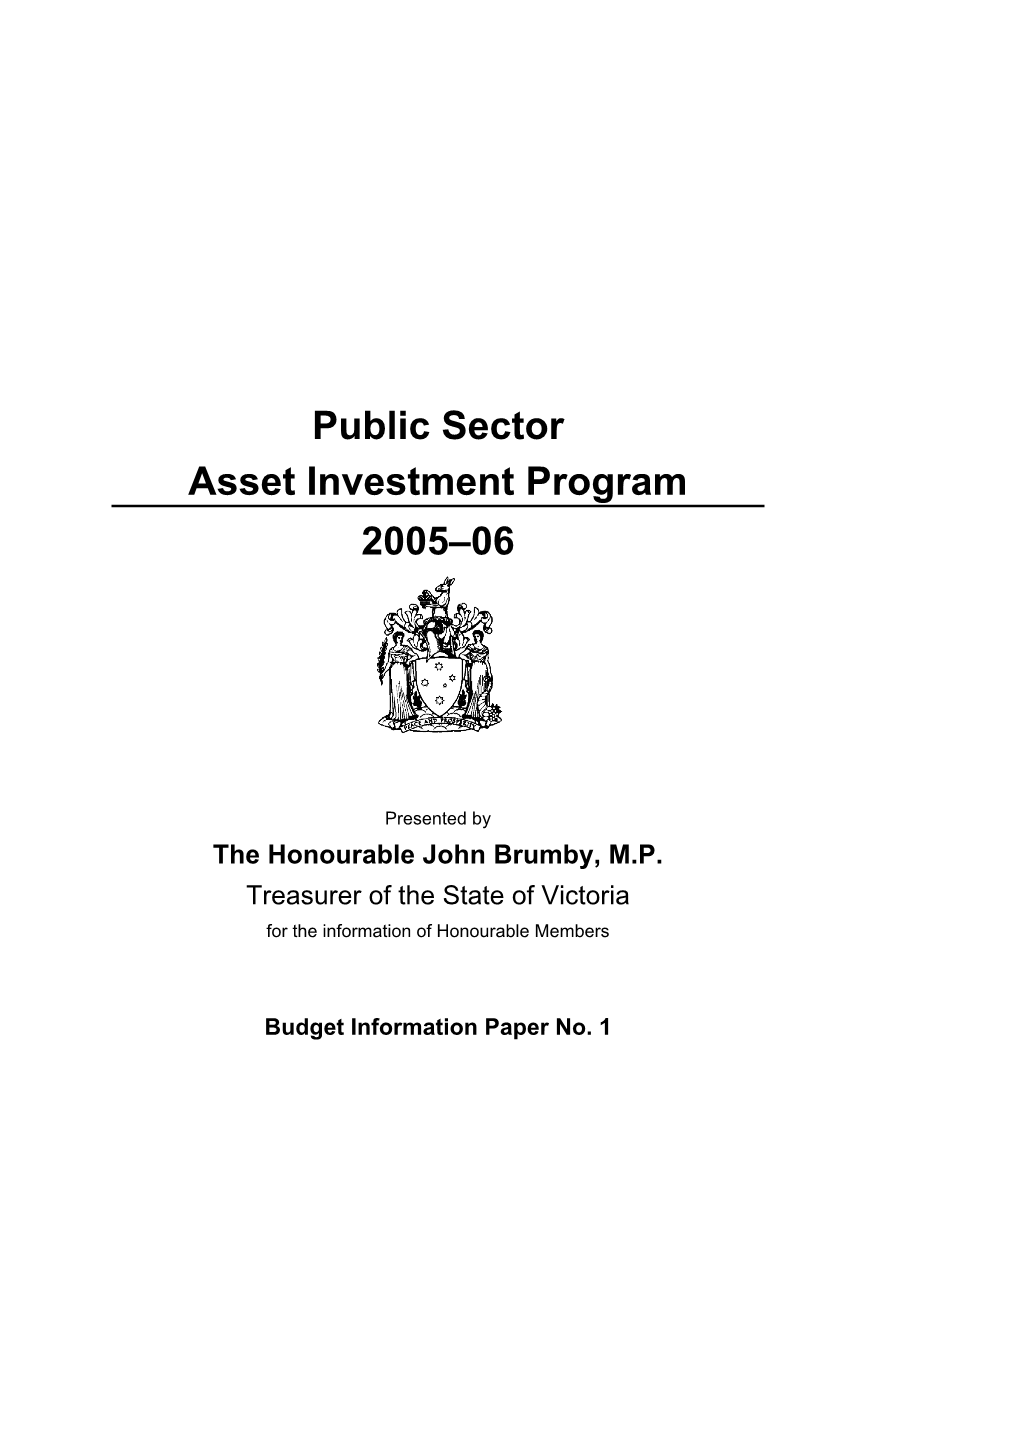 Public Sector Asset Investment Program 2005–06